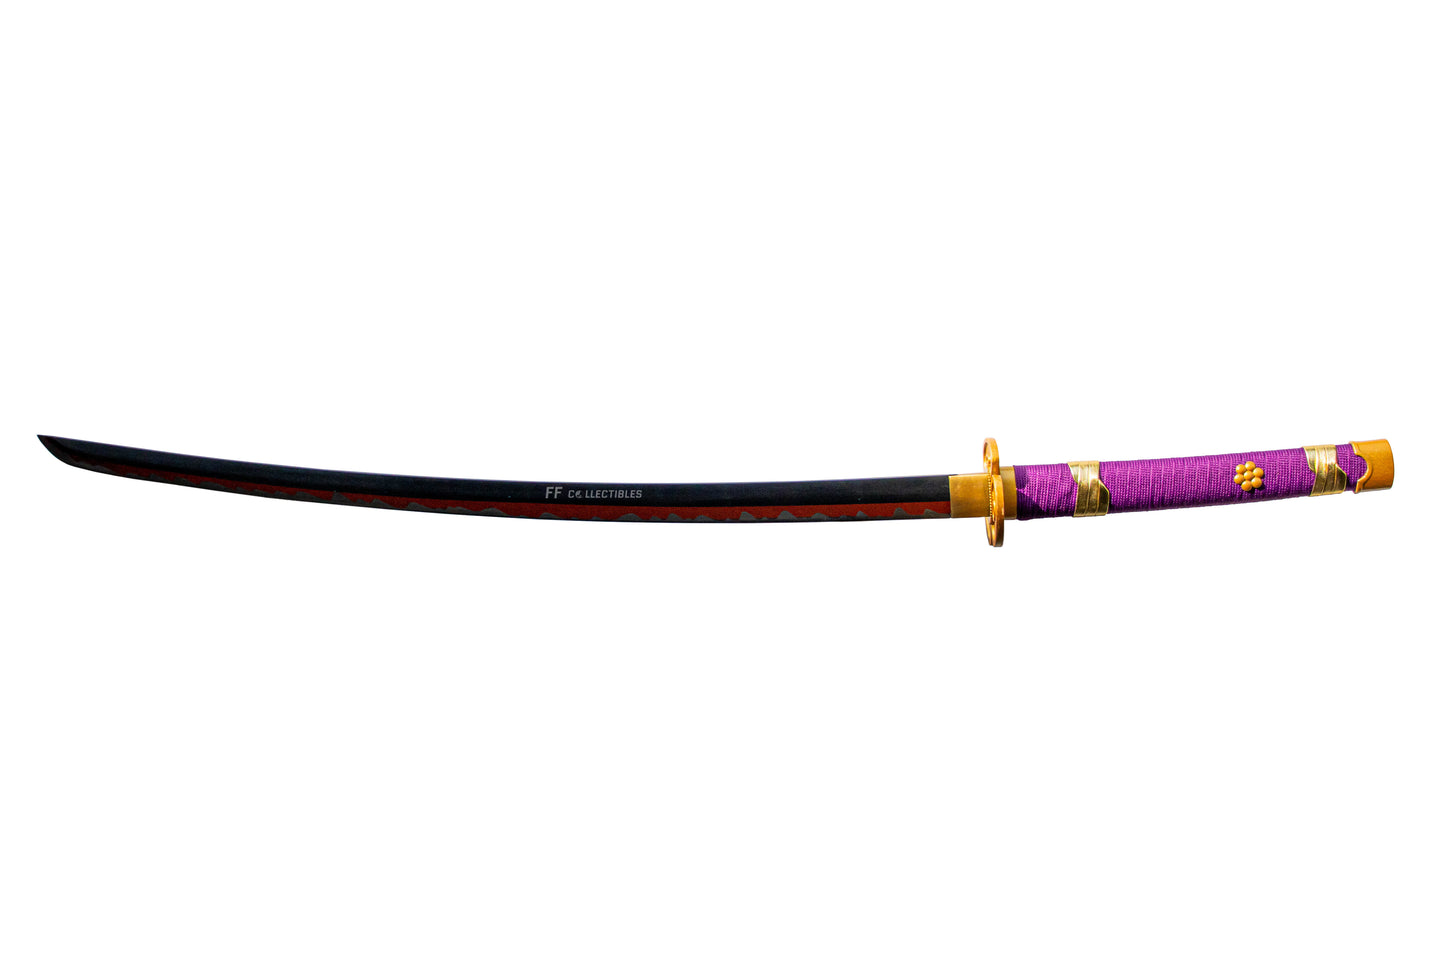 ONE PIECE – ENMA, THE SWORD OF RORONOA ZORO (w FREE sword stand)